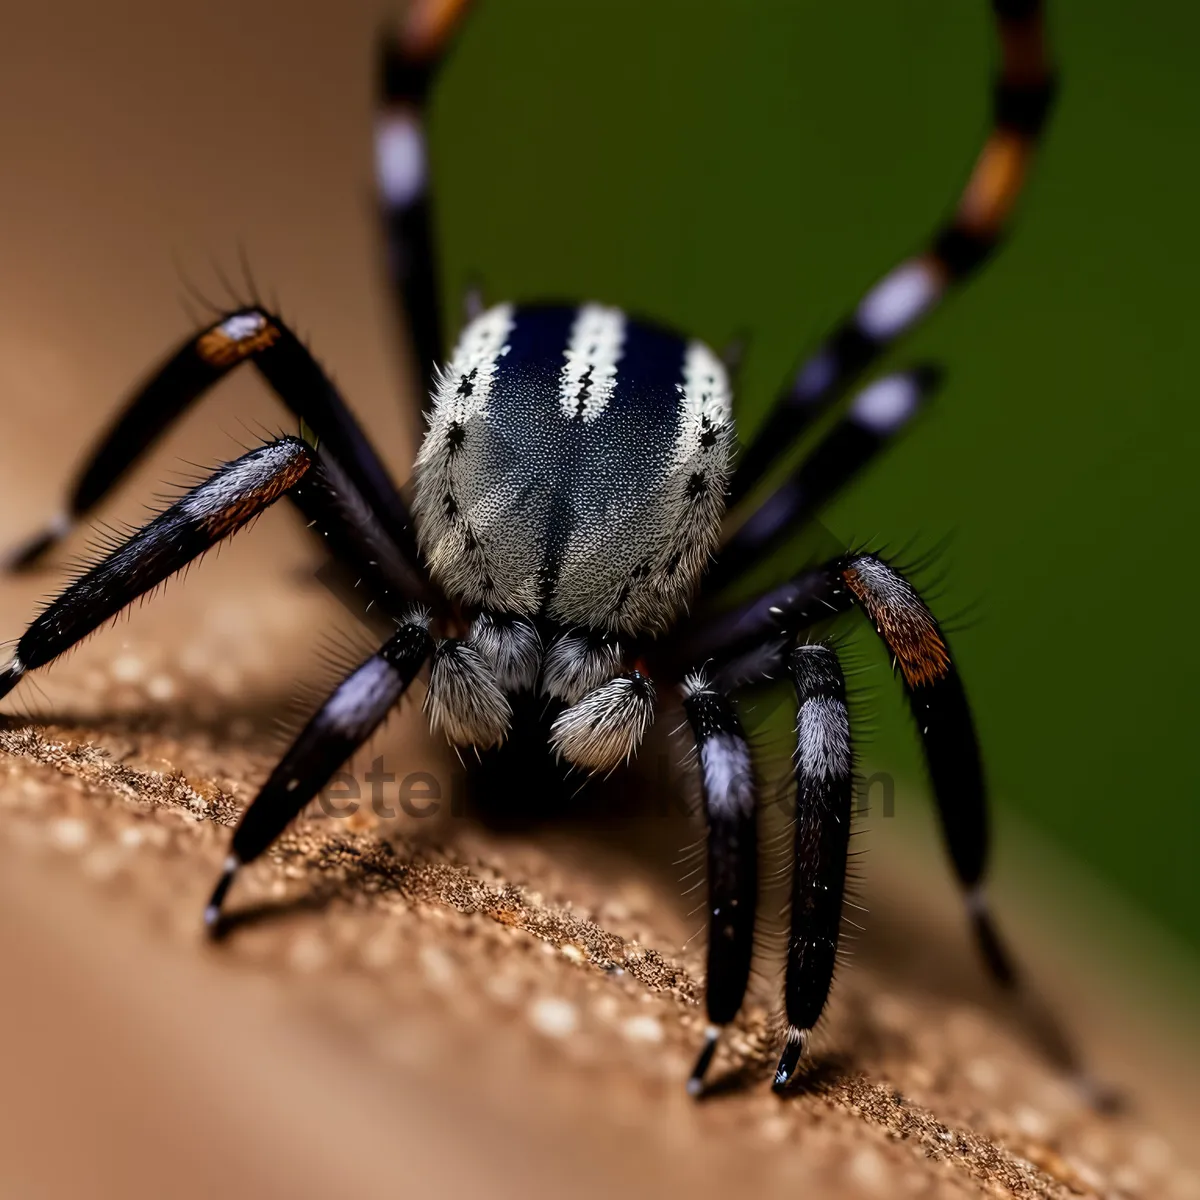 Picture of Spooky Arachnid: Garden Spider in Closeup View